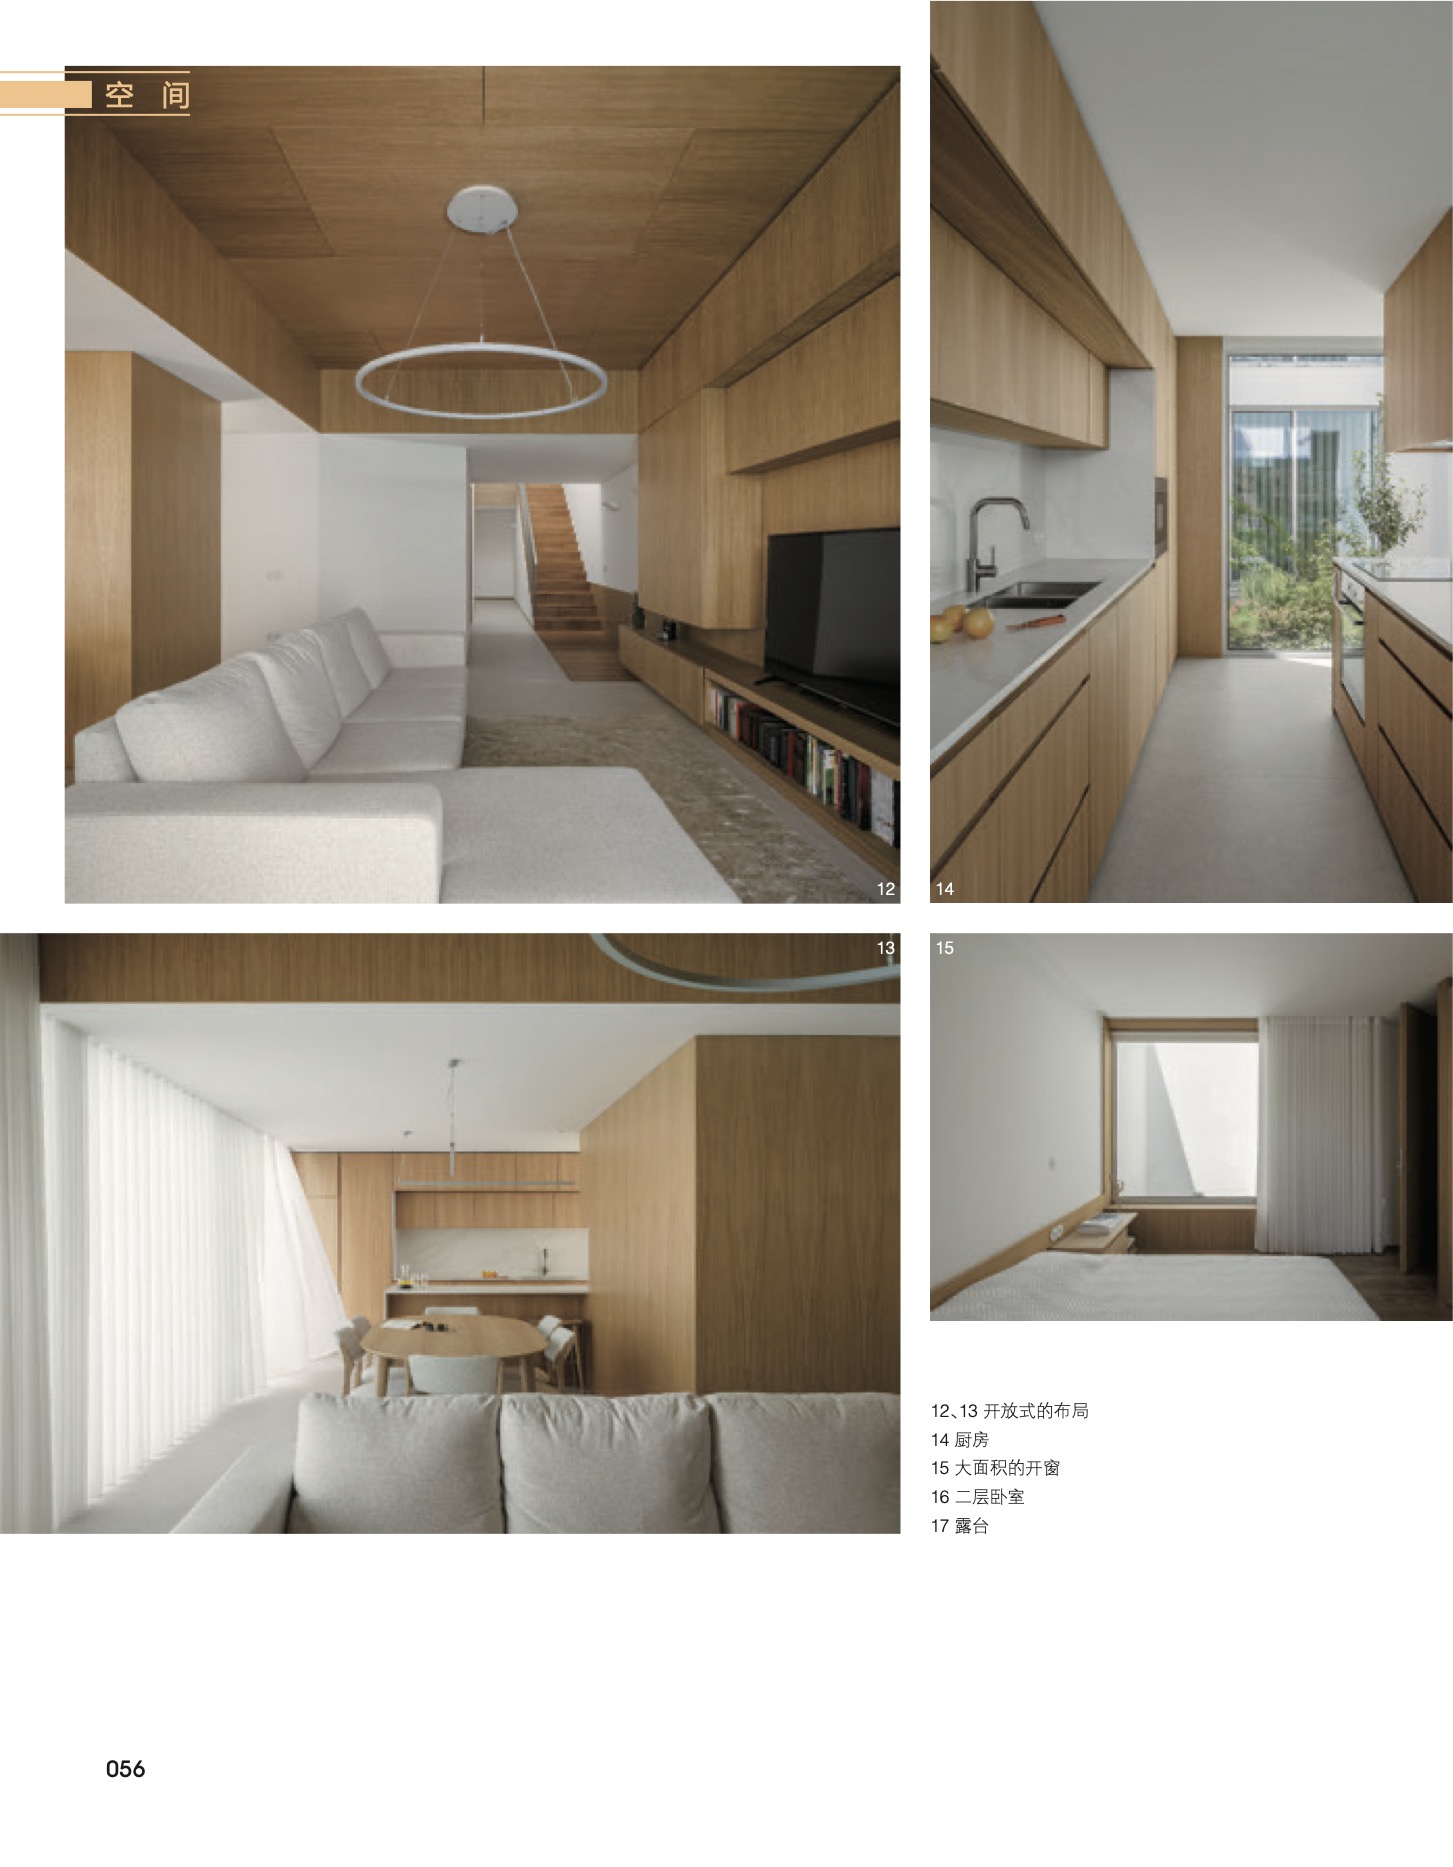 ID+C Fev 2023 do atelier pema studio com fotografia arquitetura de ivo tavares studio - architectural photography